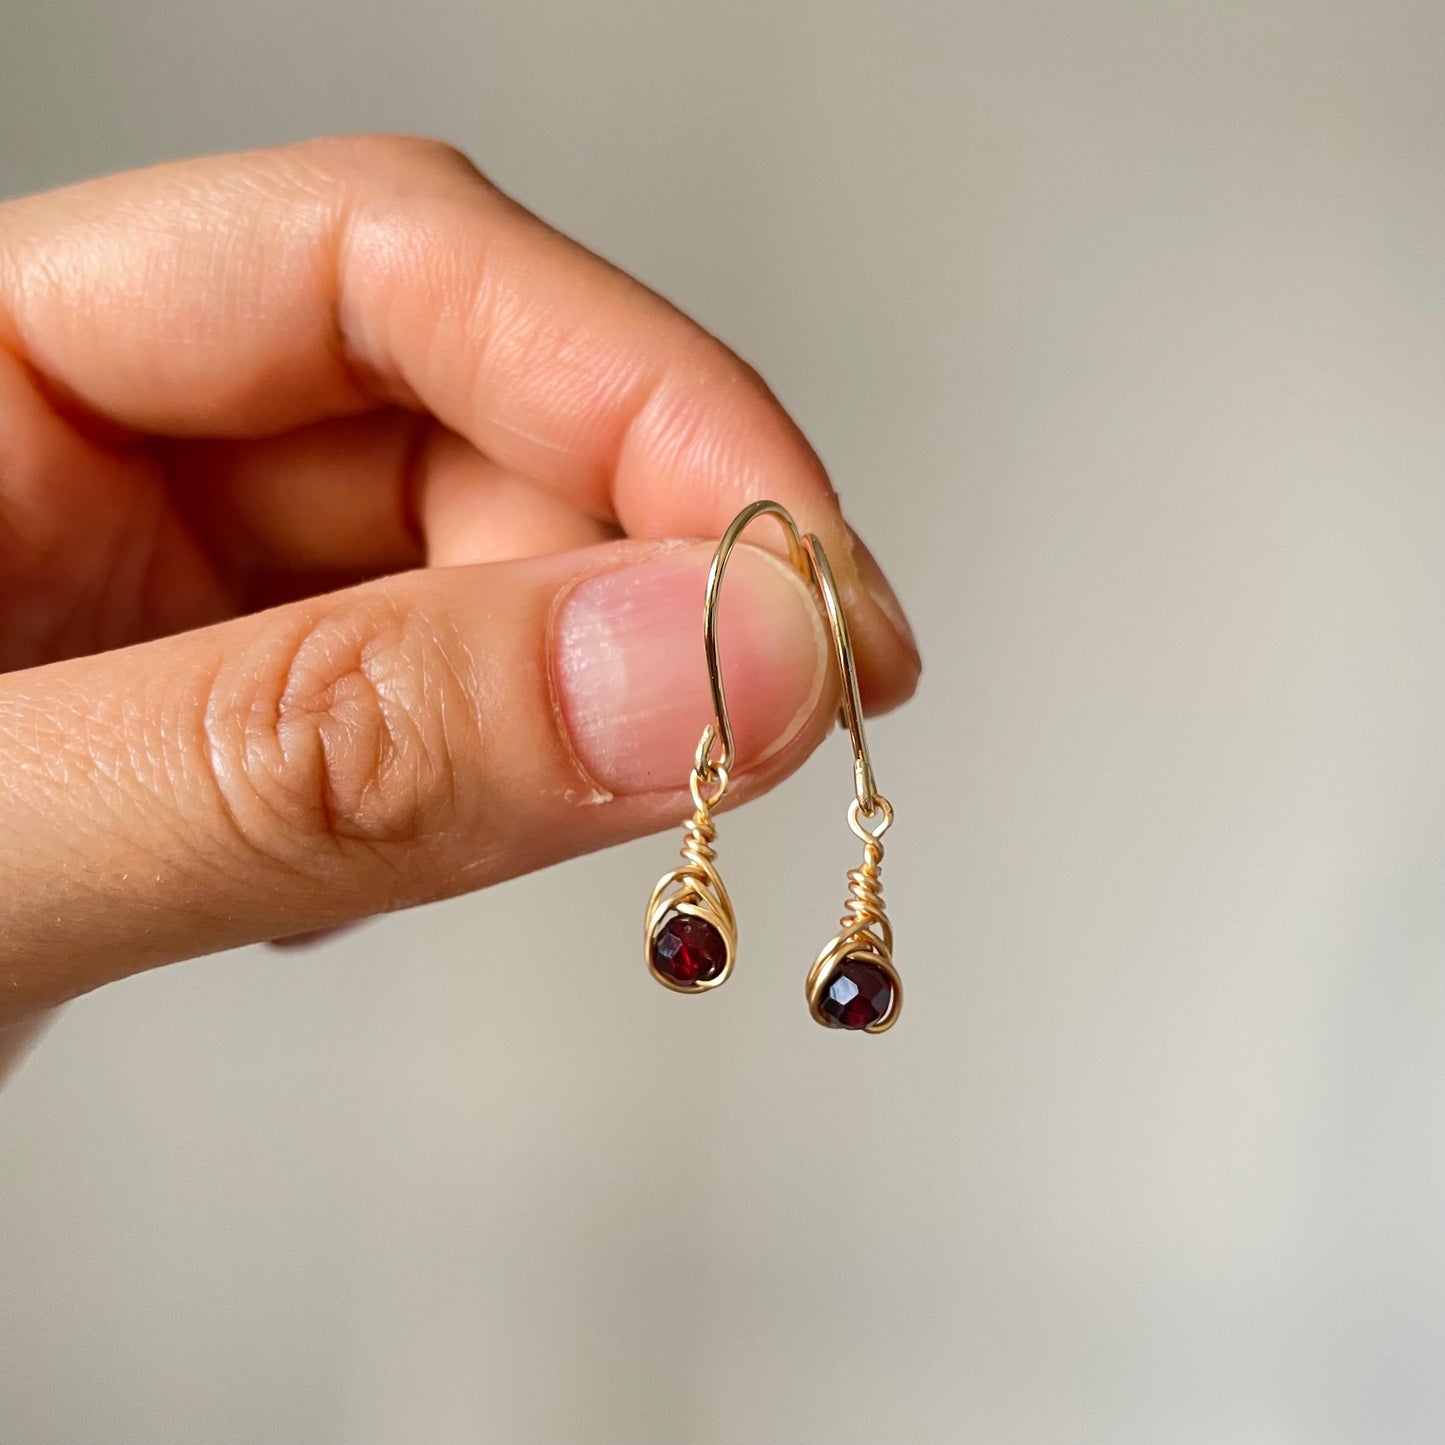 Birthstone Minimal Earrings - Gold Filled